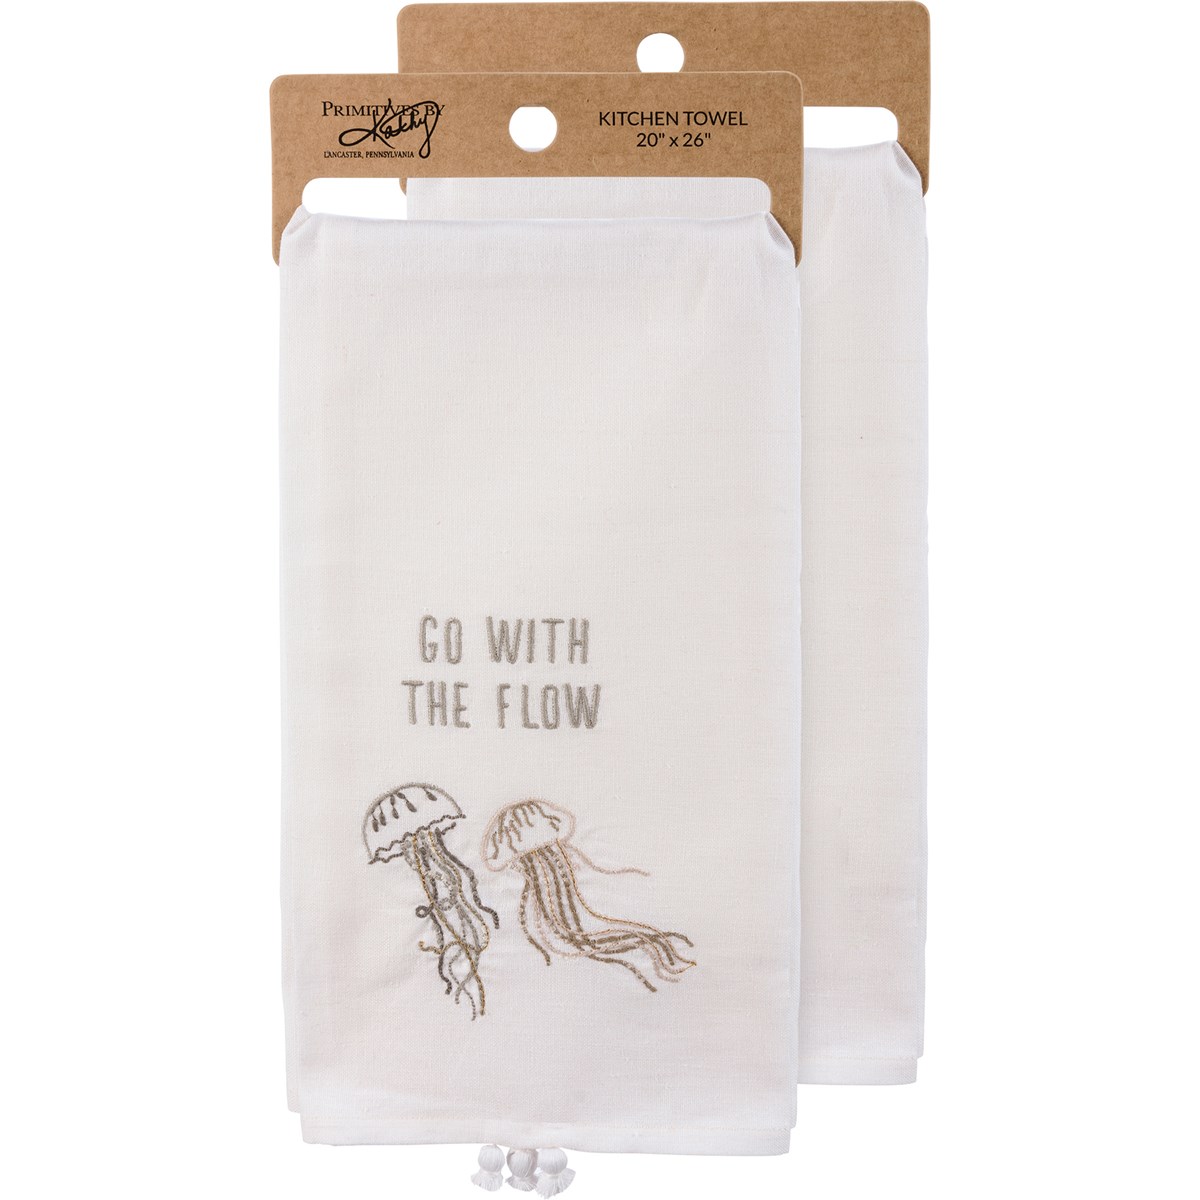 Go With The Flow Kitchen Towel - Cotton, Linen